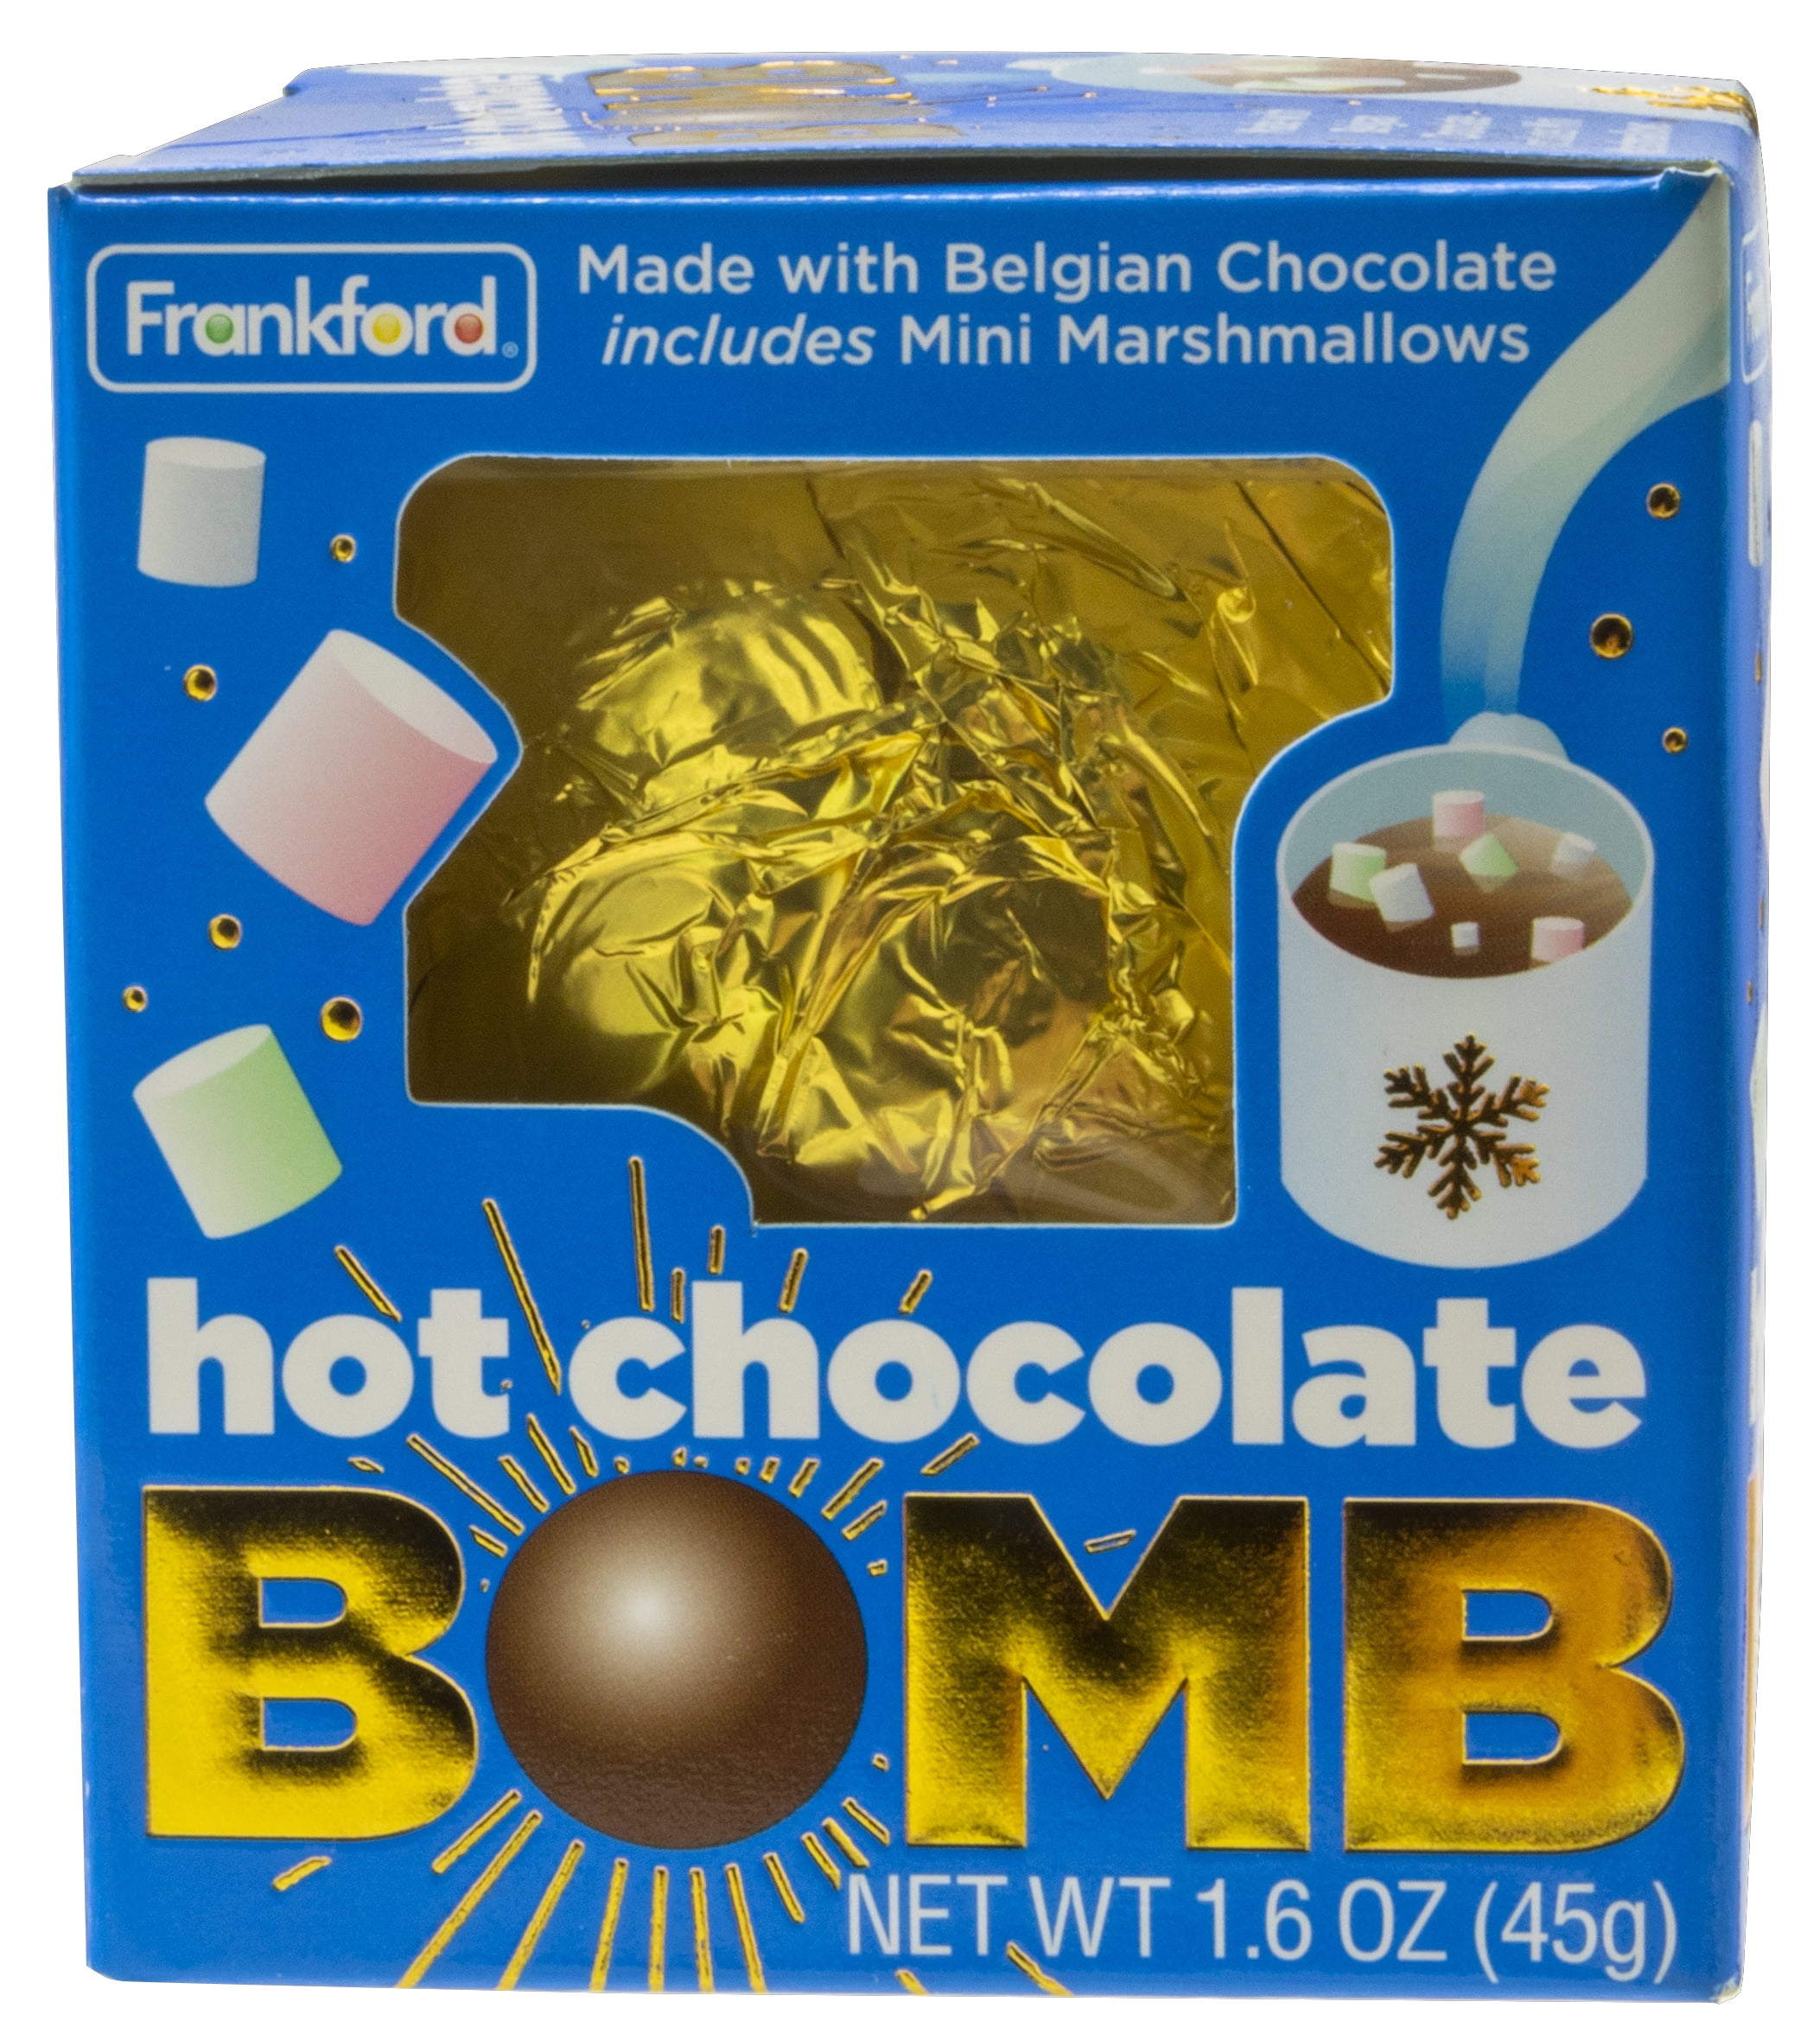 Frankford S Hot Chocolate Bomb 1 6oz Walmart Com Walmart Com